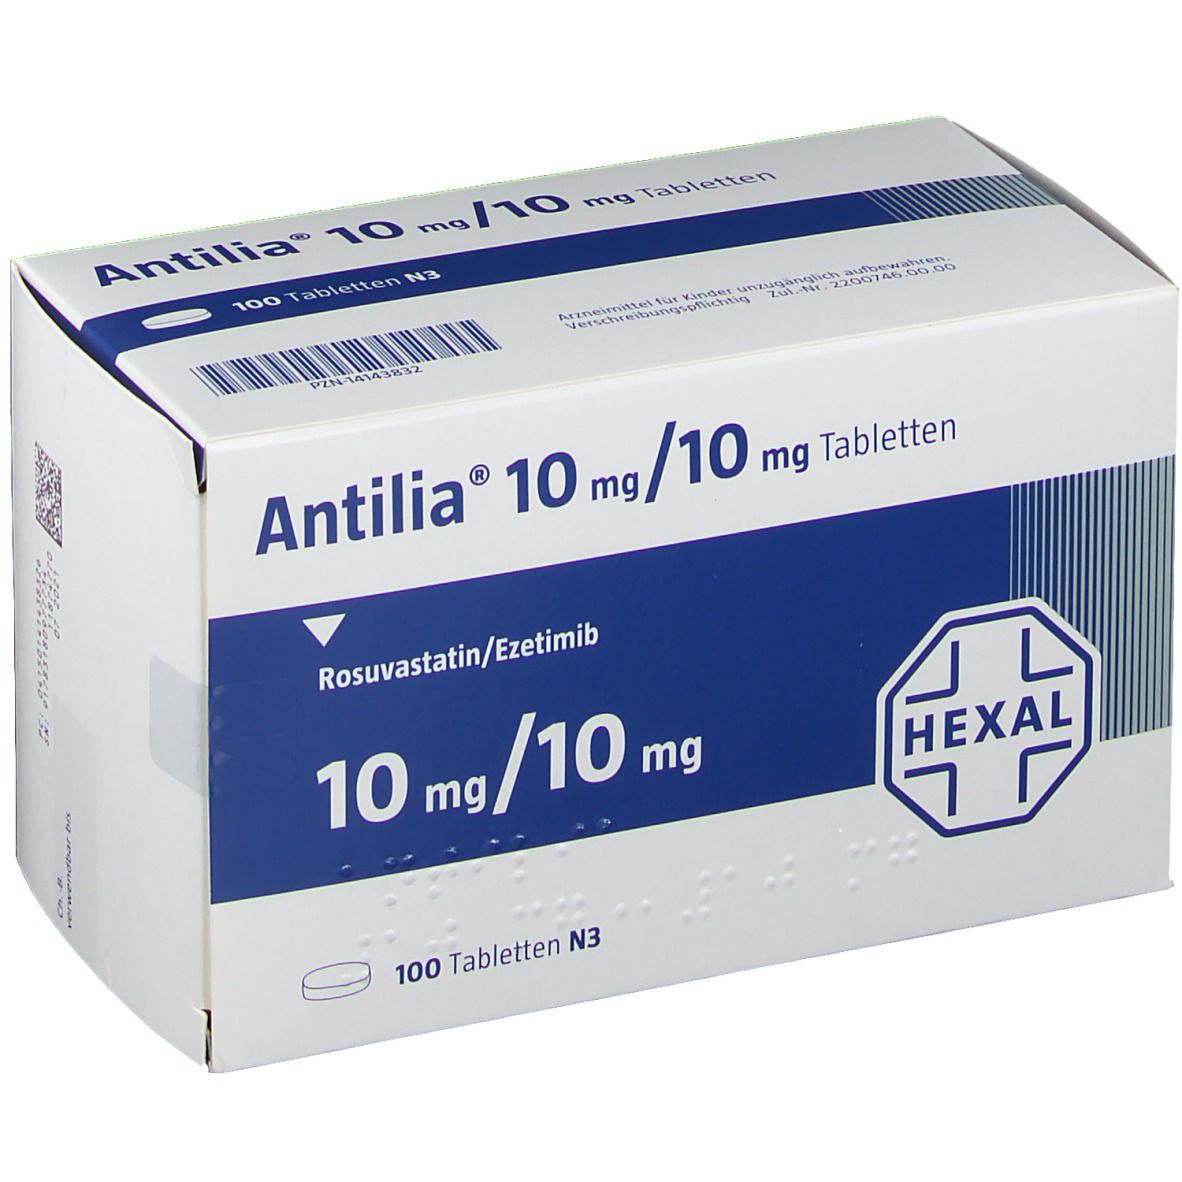 Antilia® 10 mg/10 mg